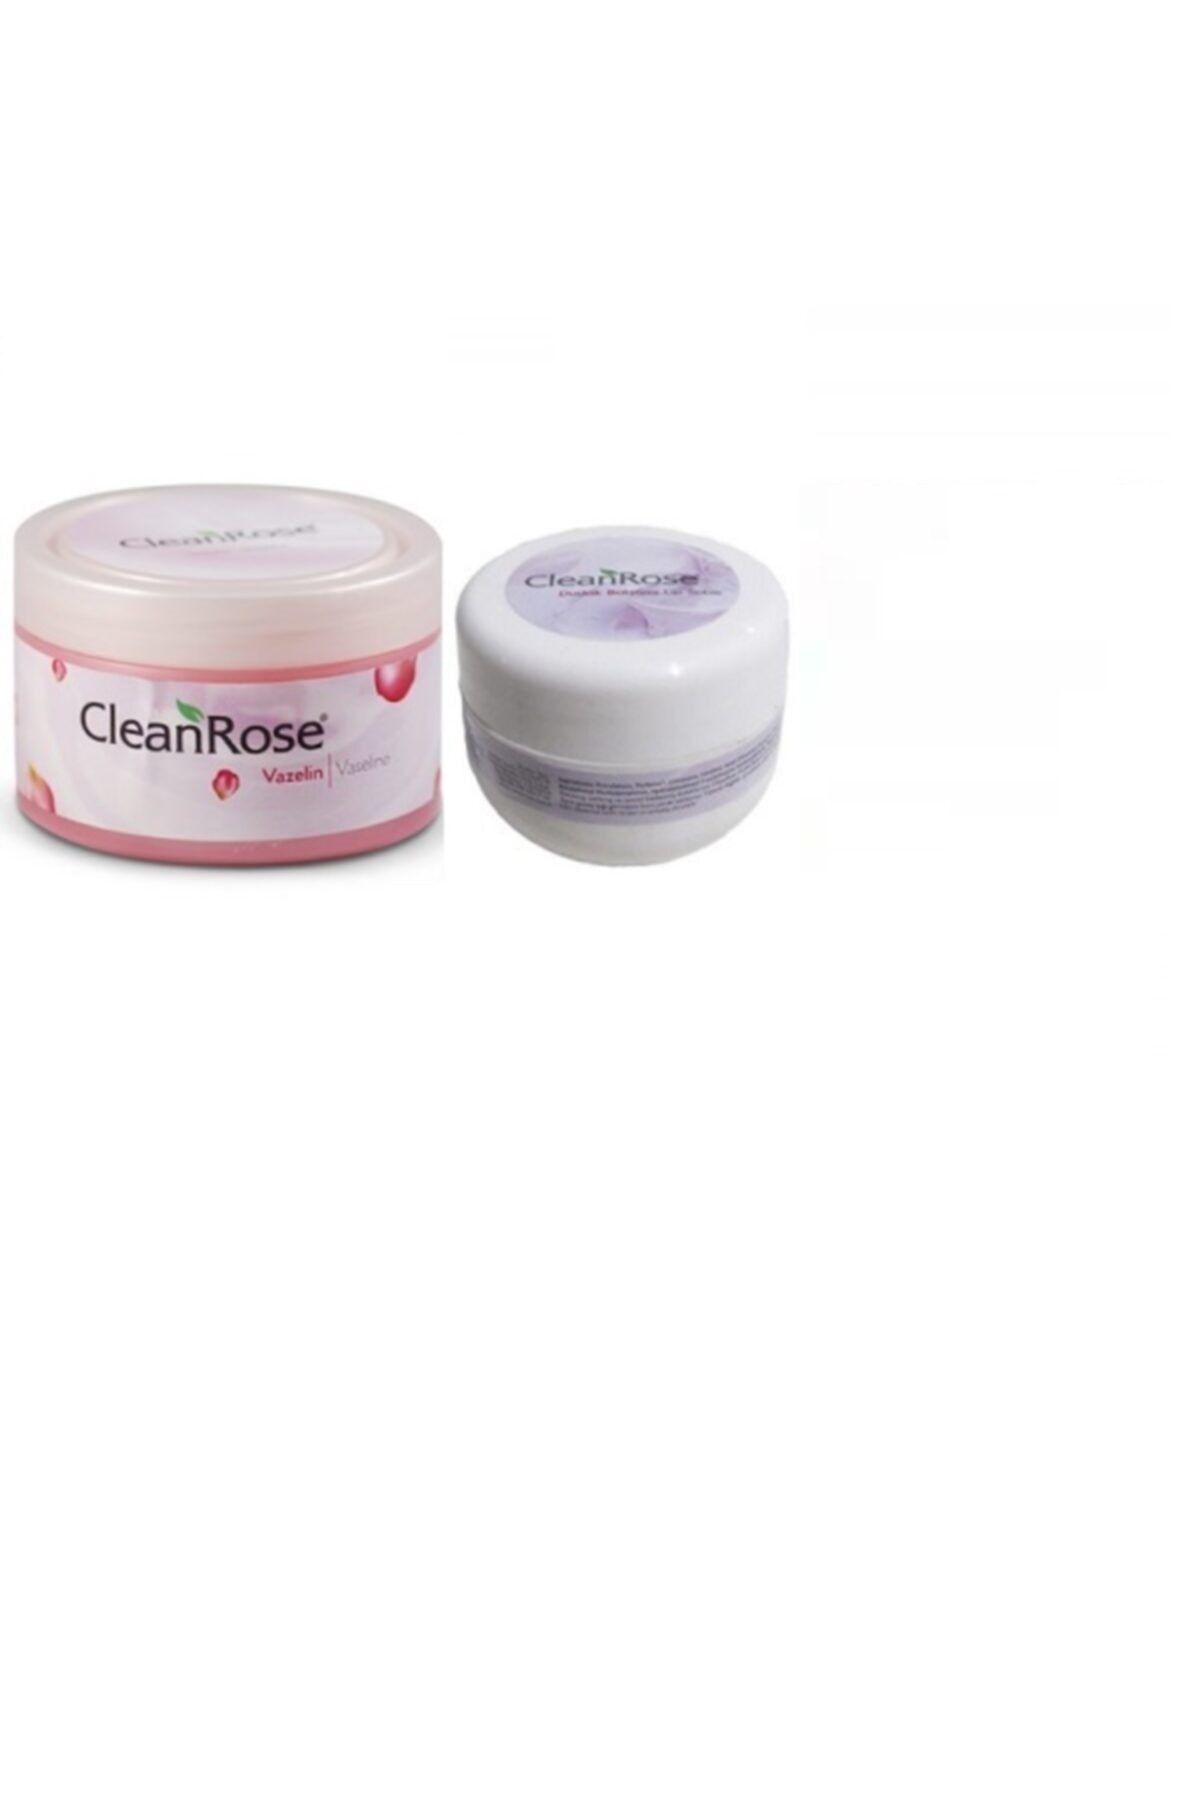 Clean Rose Cleanrose Vazelin 90 ml Dudak Balsamı 25 Ml(ISPARTAMDAN)